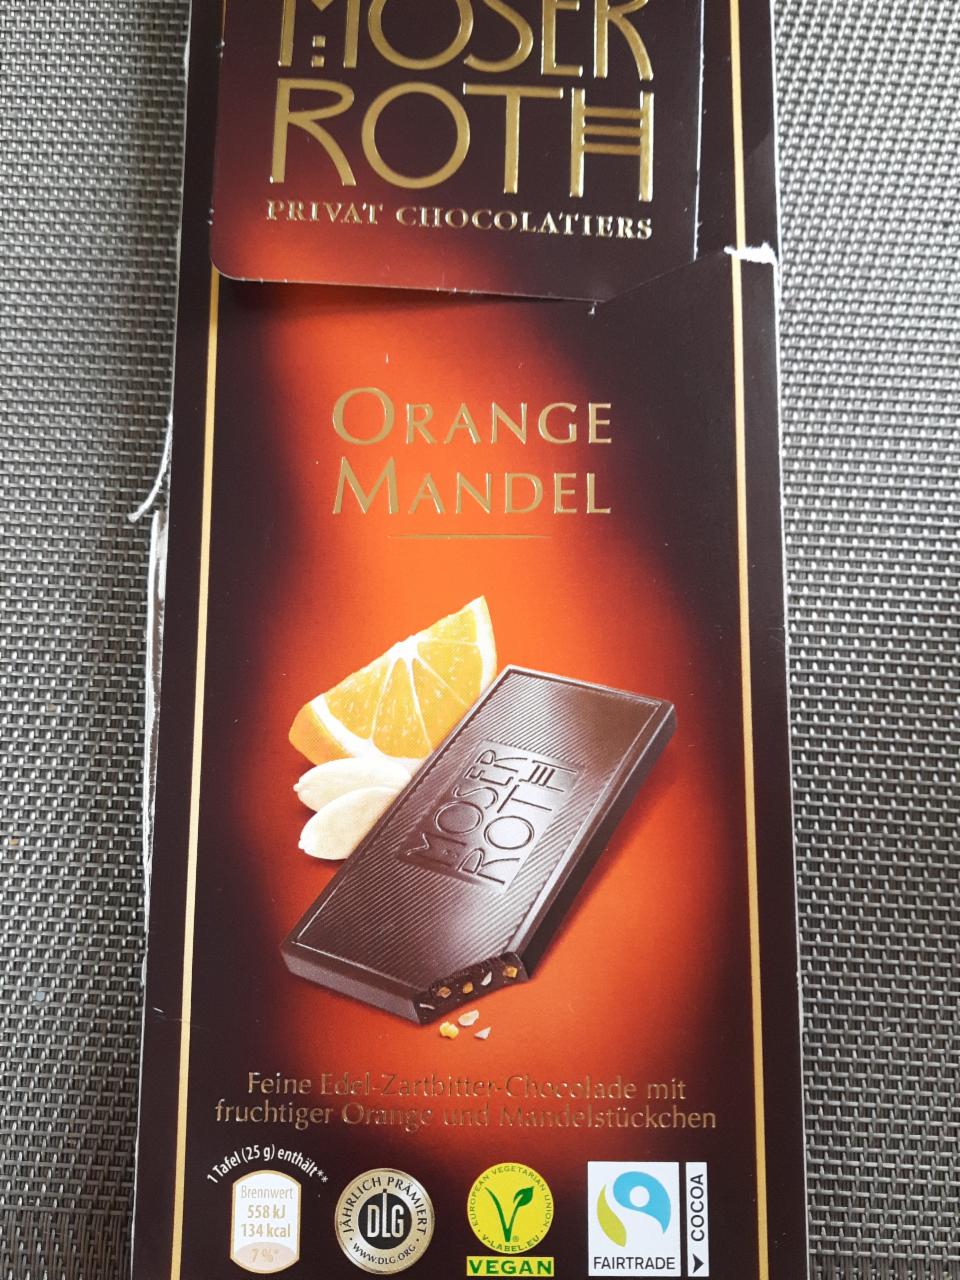 Фото - Шоколад чорний апельсин із мигдалем Orange Mandel Moser Roth